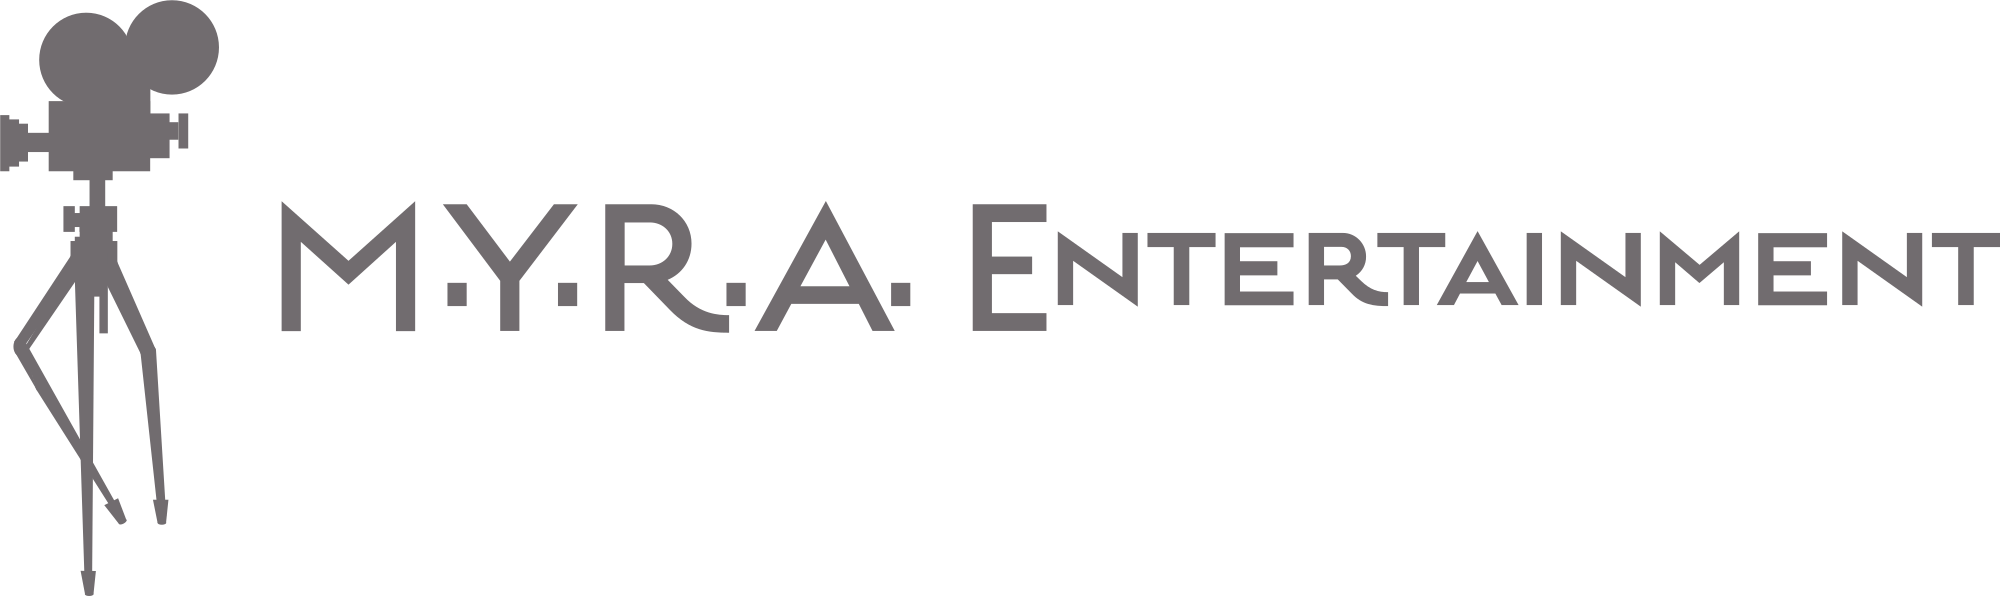 M.Y.R.A. Entertainment Logo